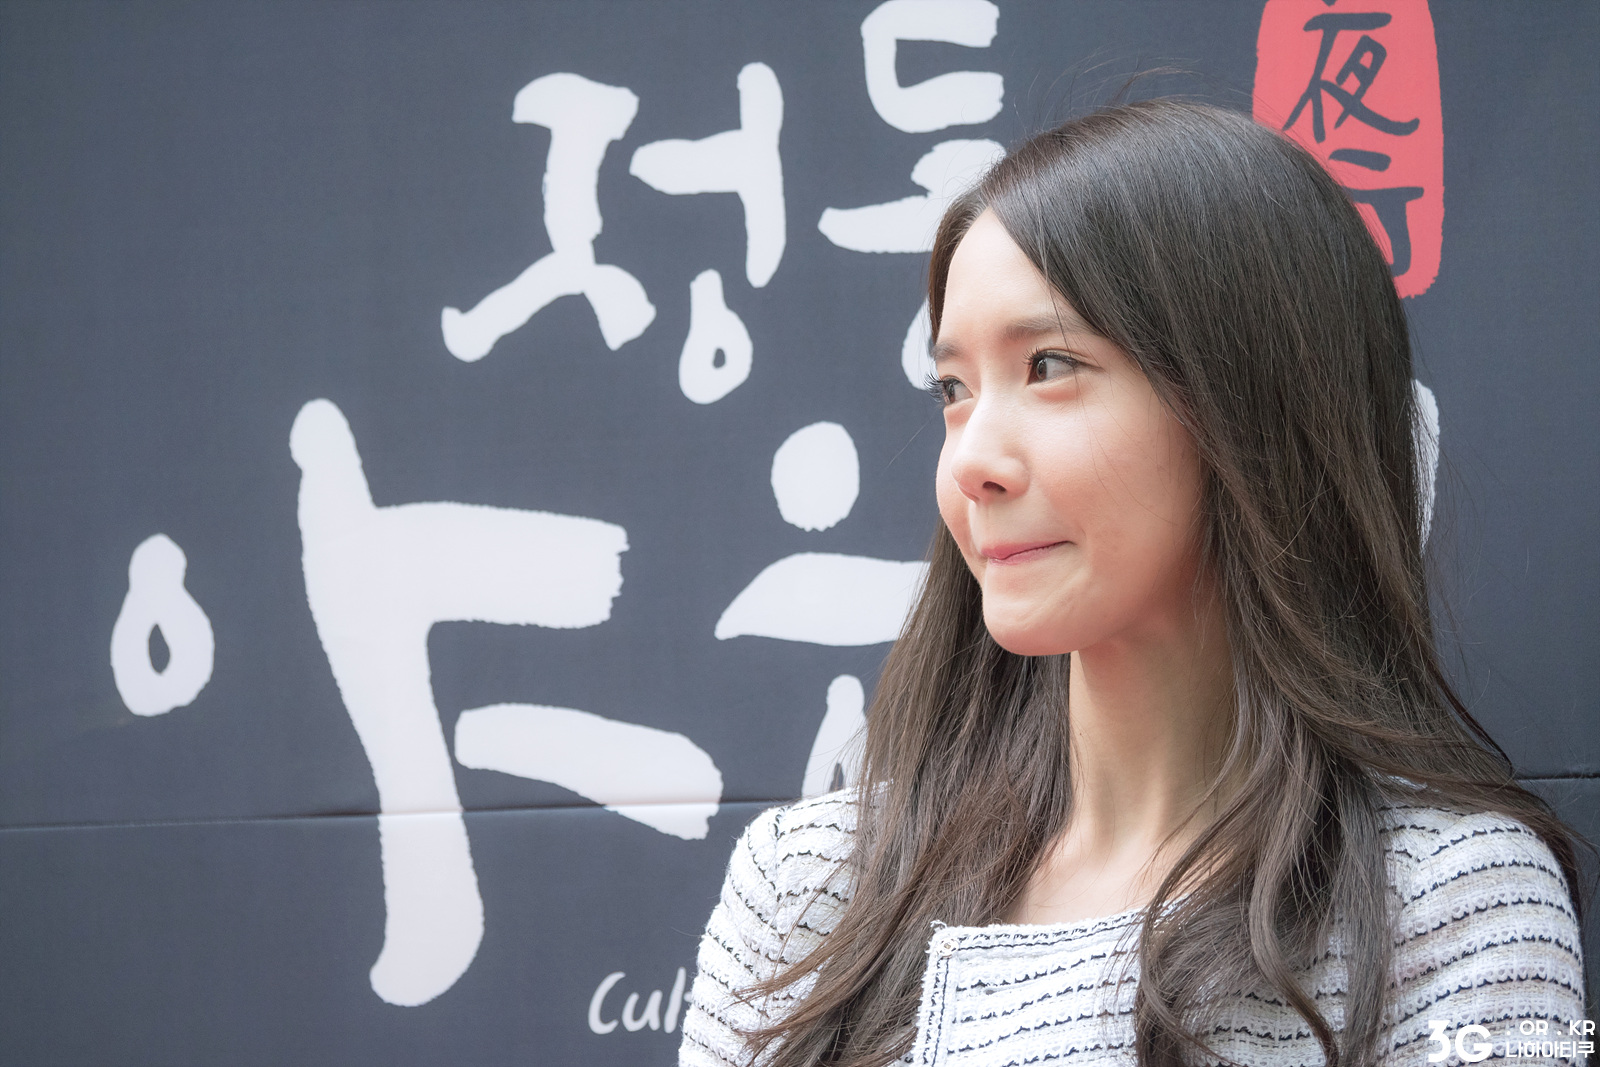 [PIC][29-05-2015]YoonA tham dự "Jung-gu Culture Night Festival" tại Deoksugung vào chiều nay - Page 2 2257644A556C20BC2A3C6E